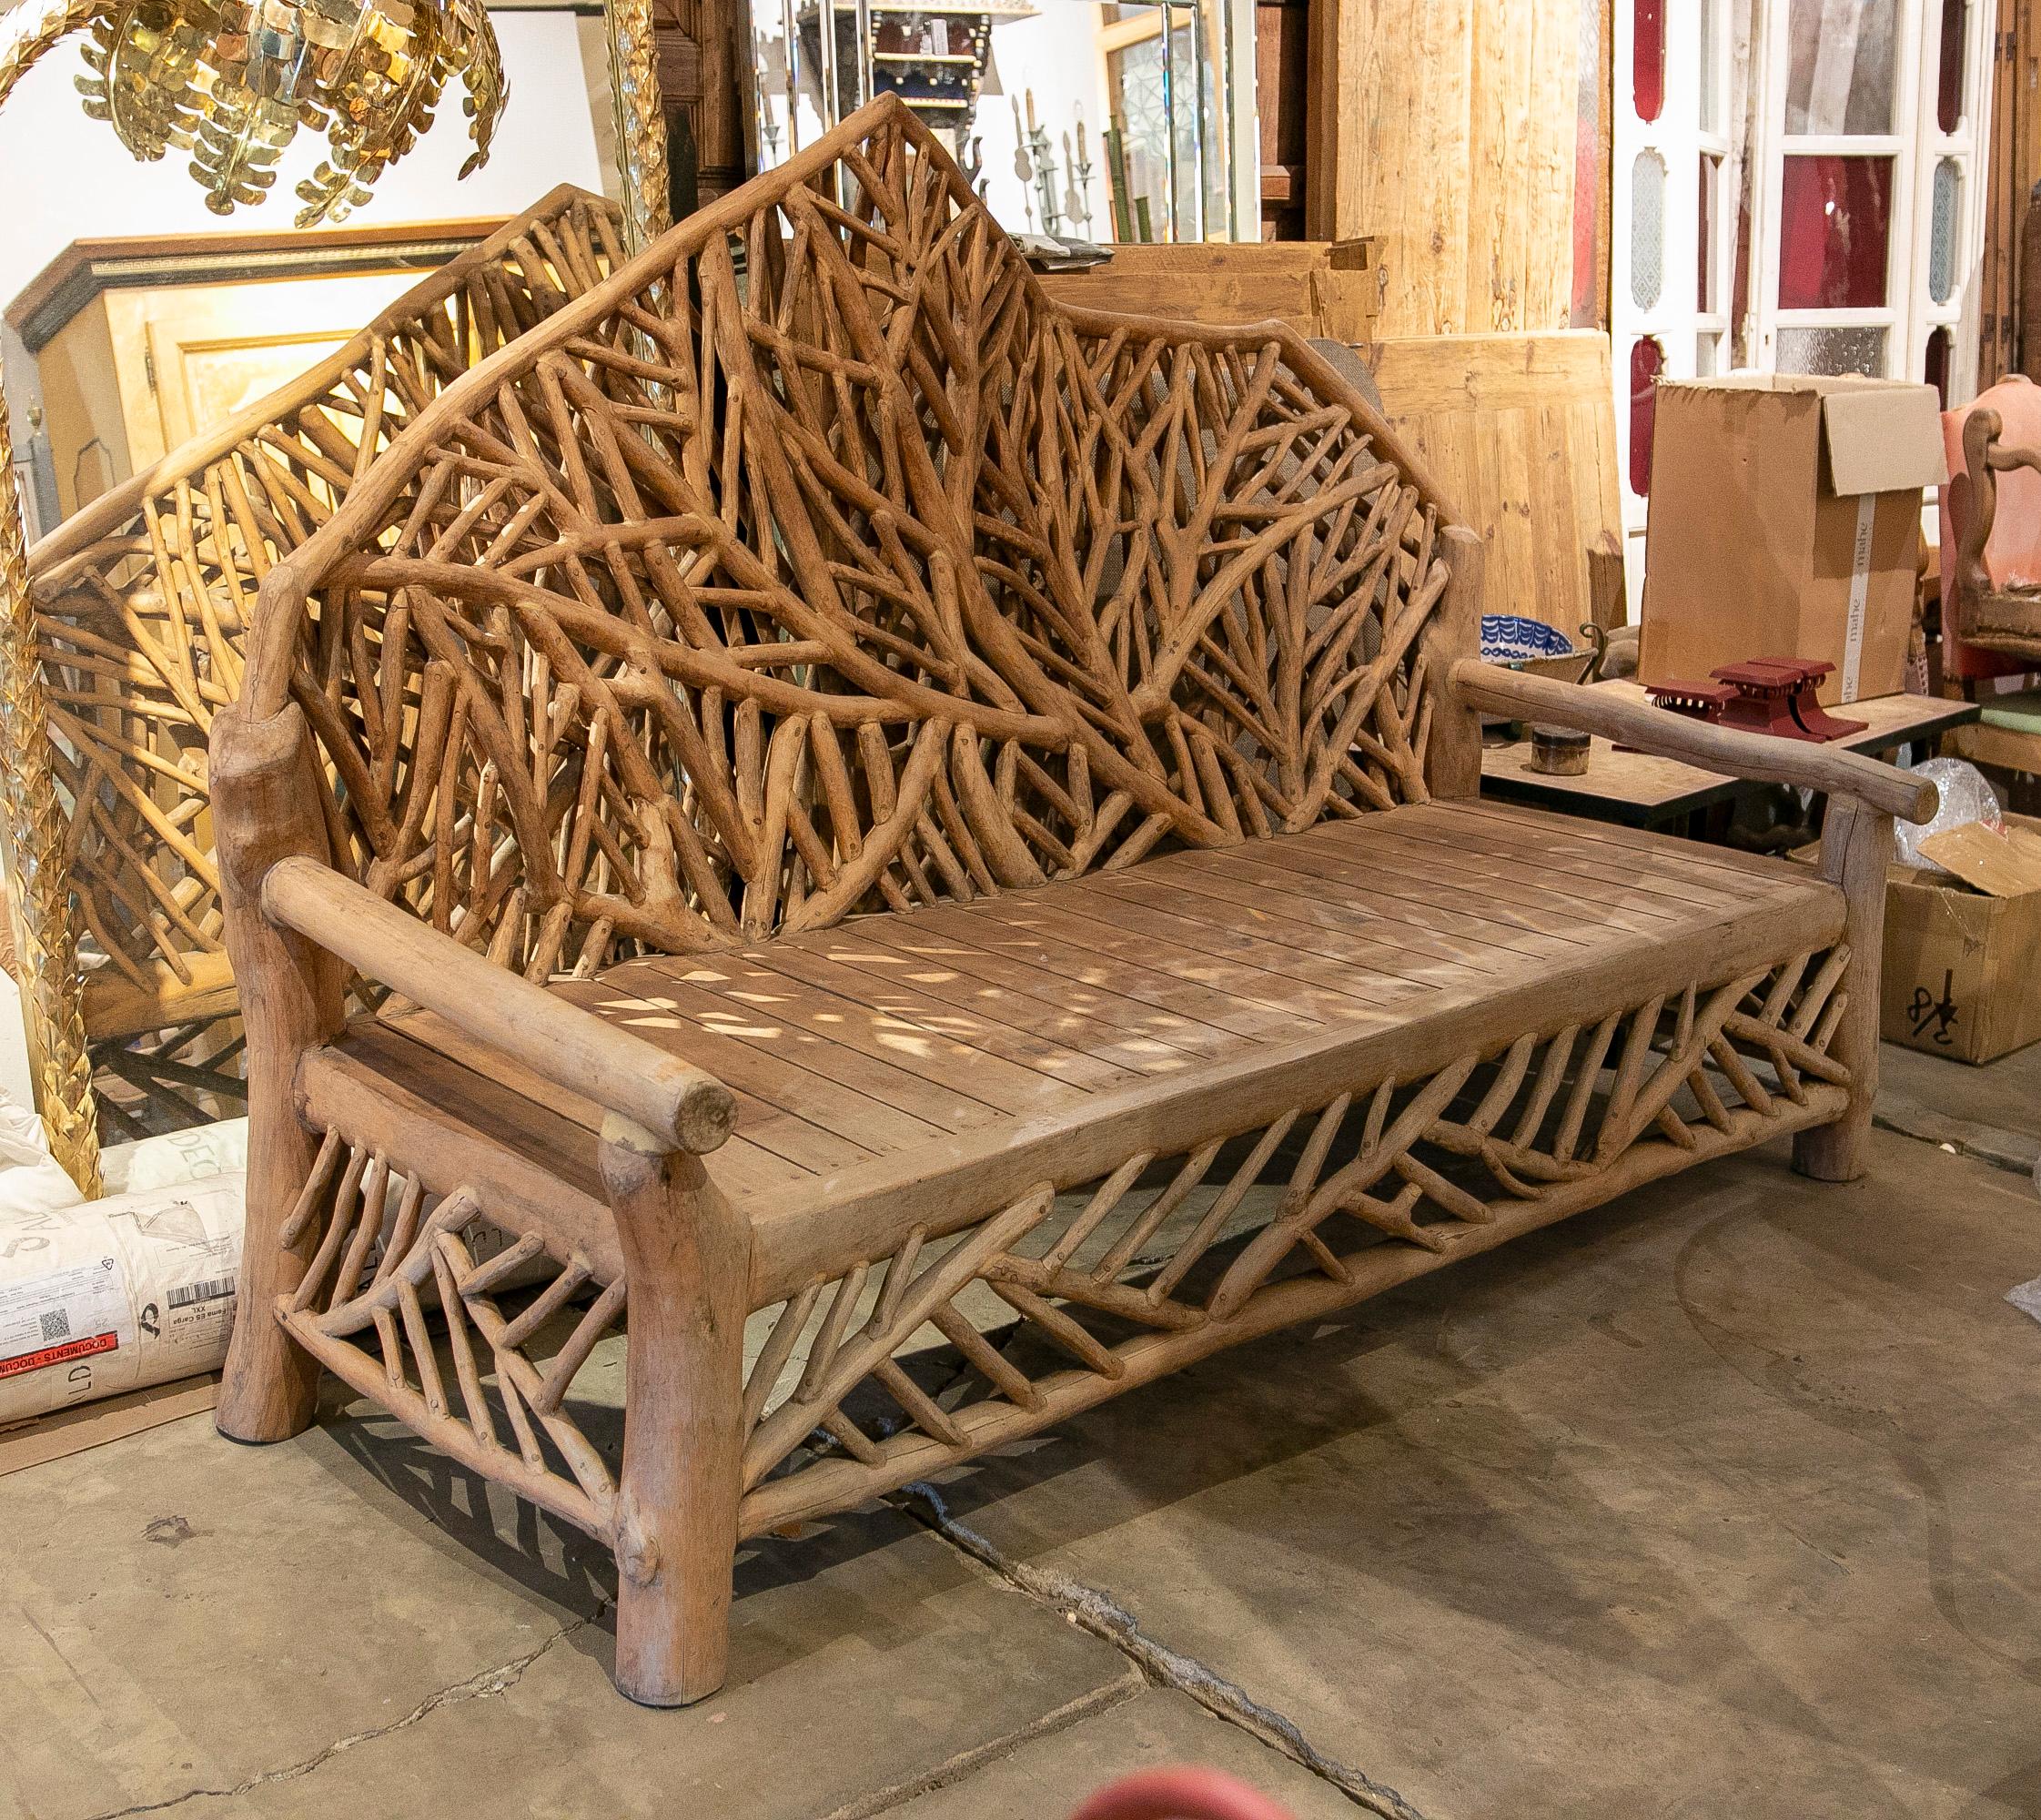 Handmade wooden sofa made of wooden logs for the garden.